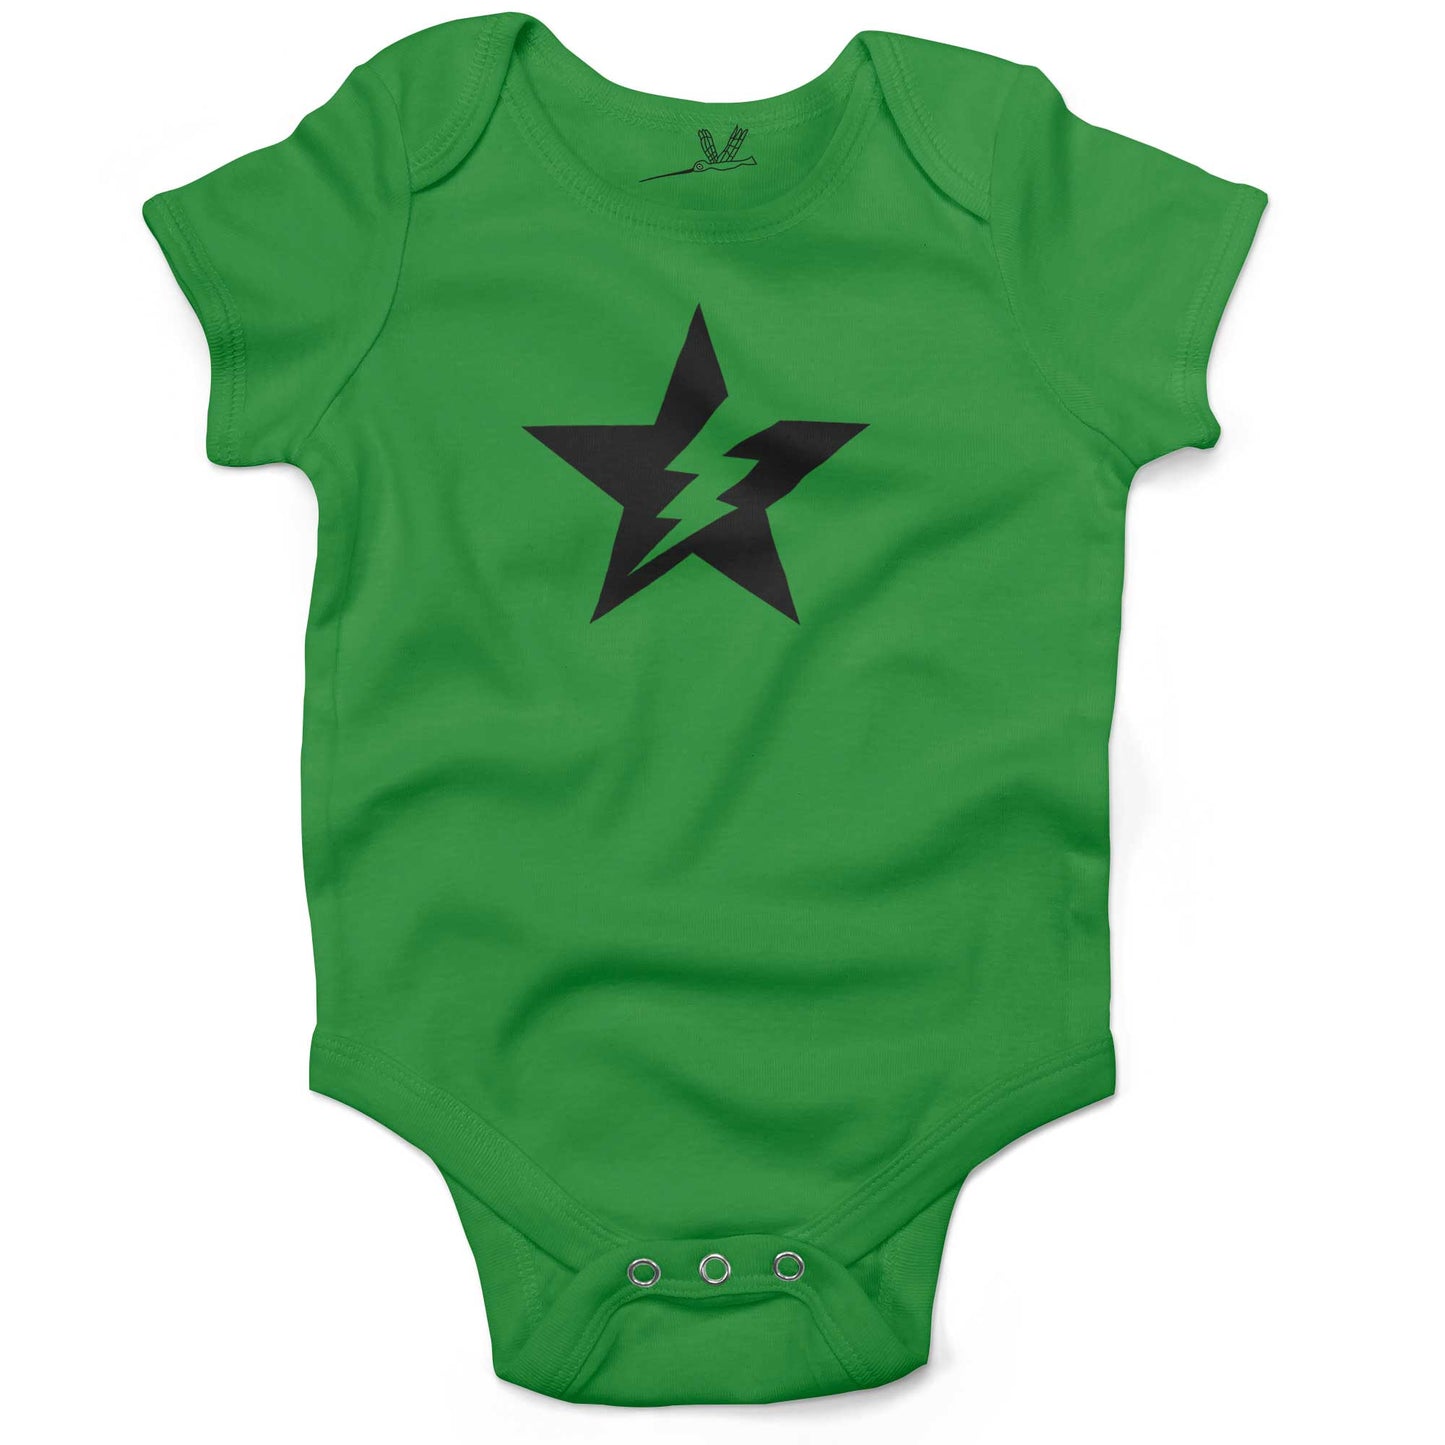 Star Bolt Infant Bodysuit or Raglan Baby Tee-Grass Green-3-6 months